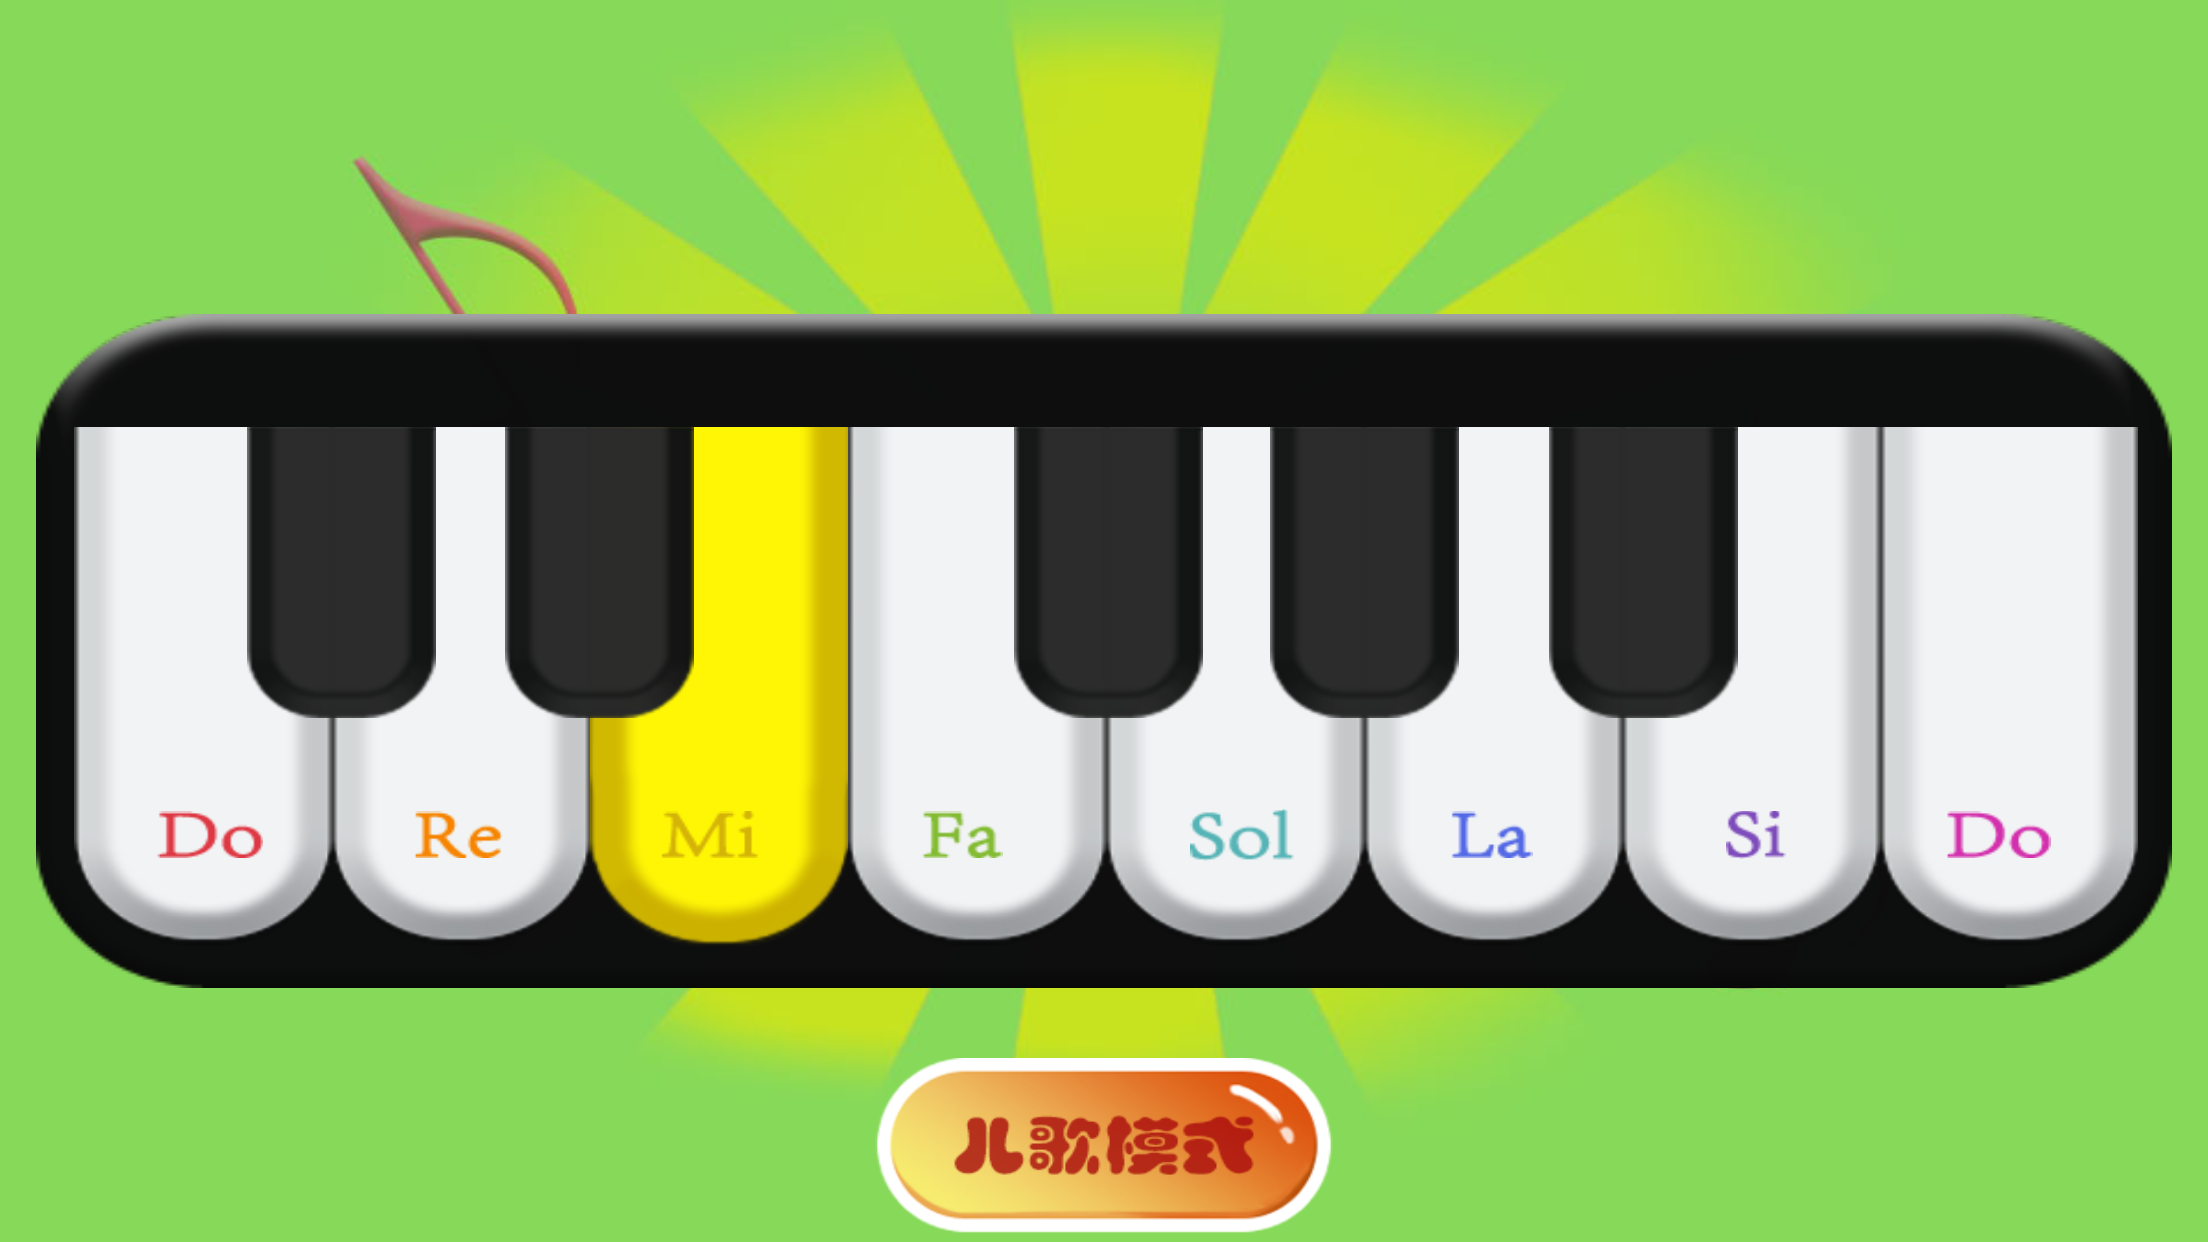 Music Tiles 2 - Fun Piano Game by Doan Le Quyen